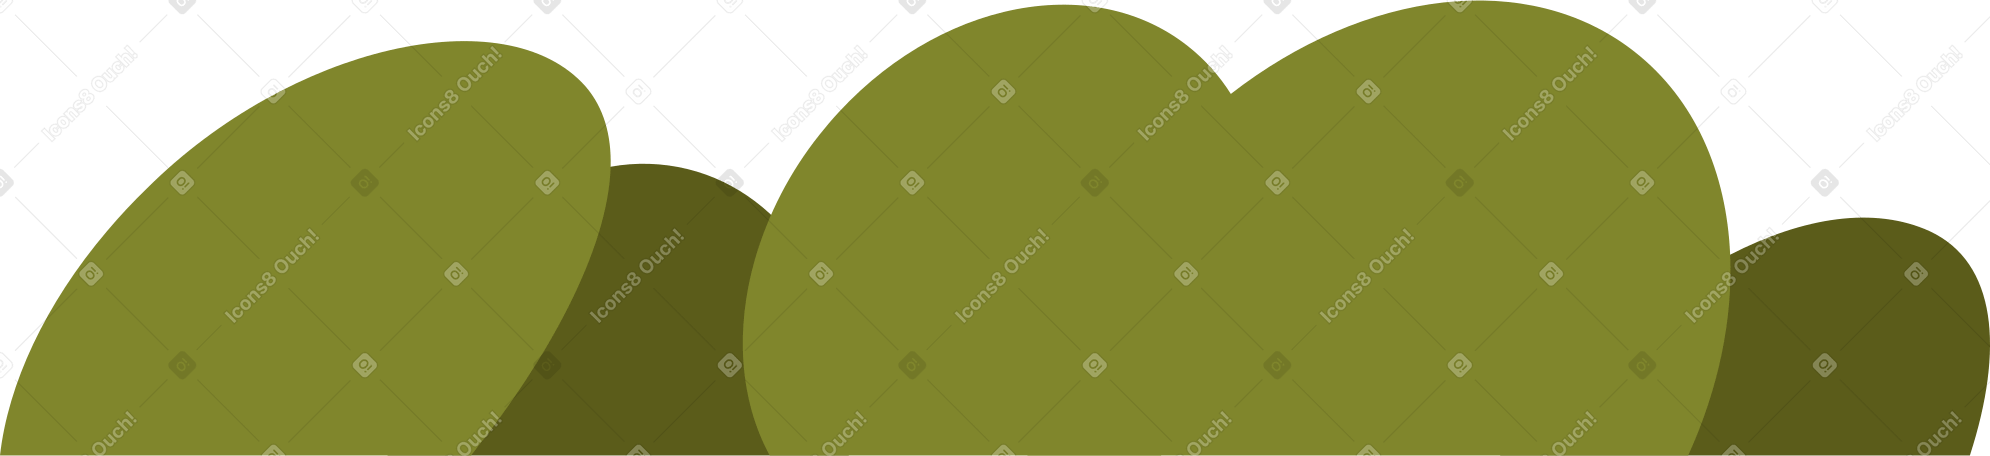 bushes of green grass Illustration in PNG, SVG